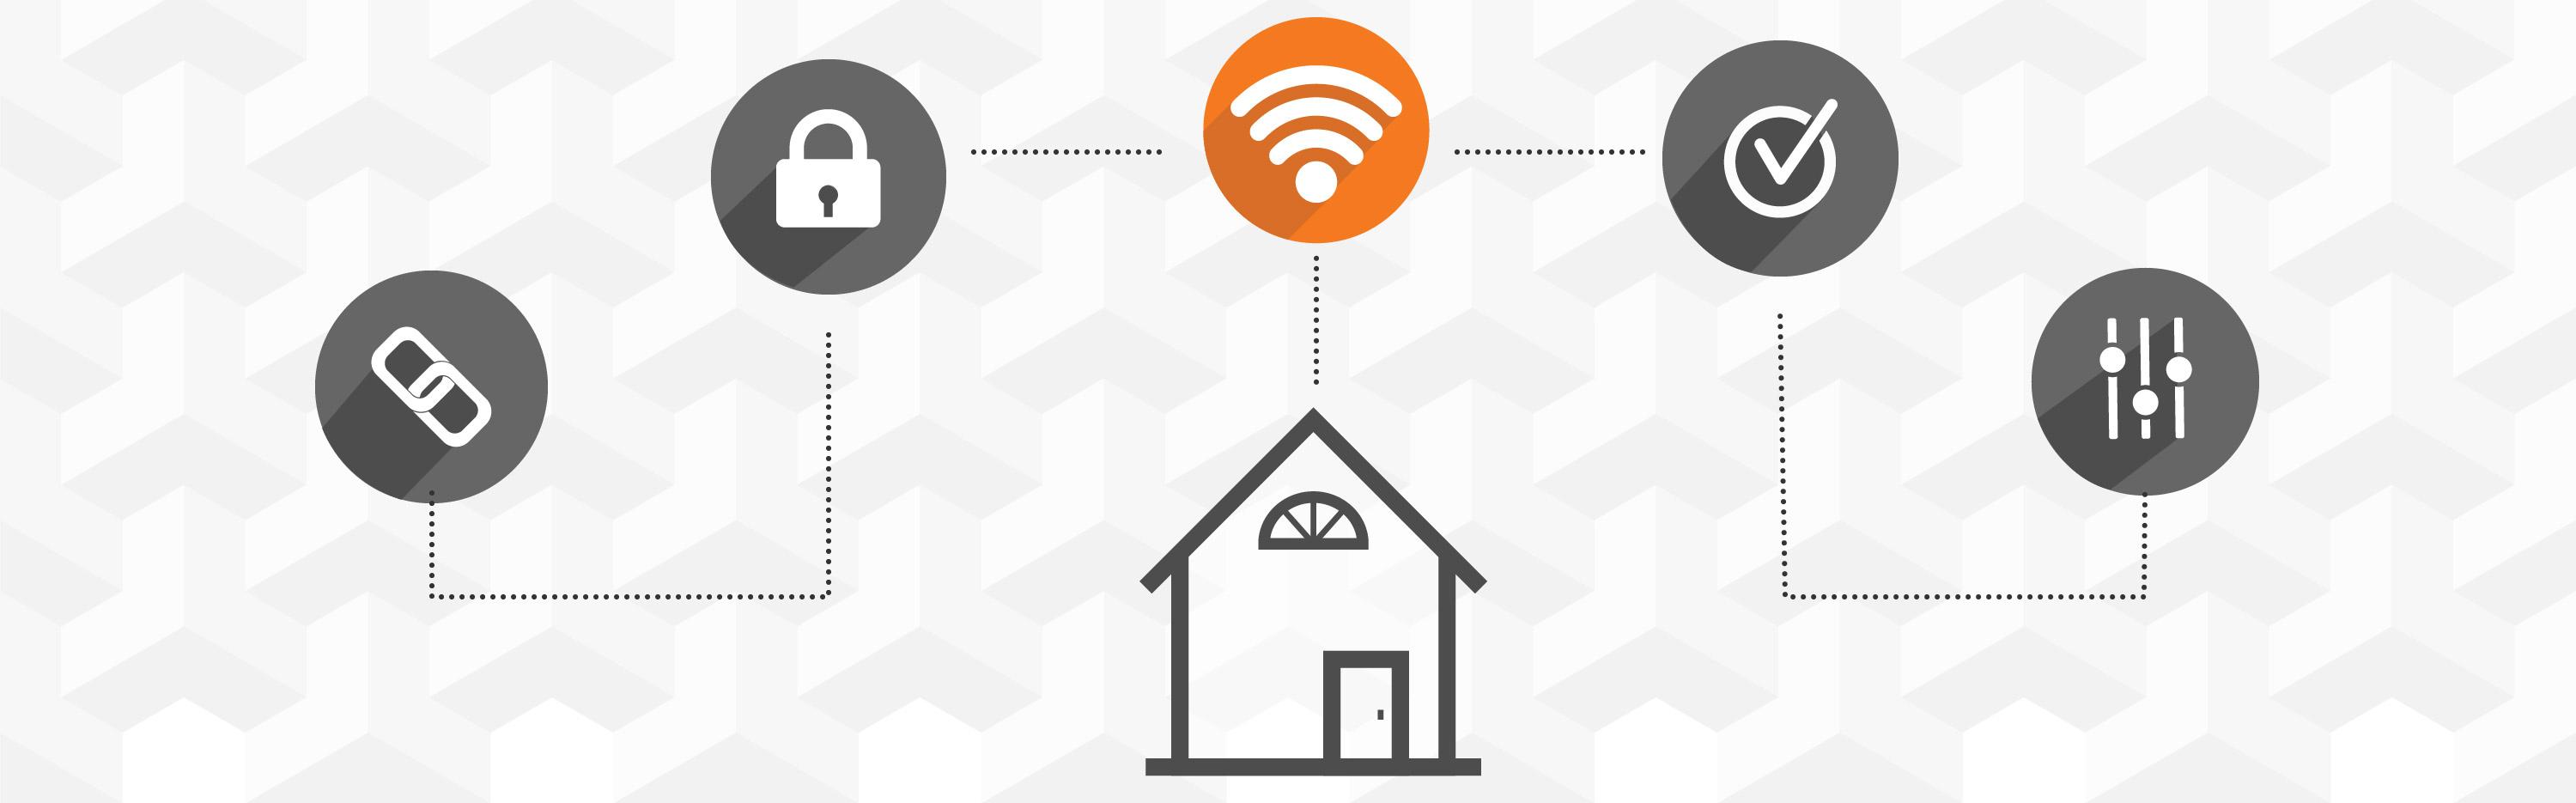 Smart Home WiFi illustration